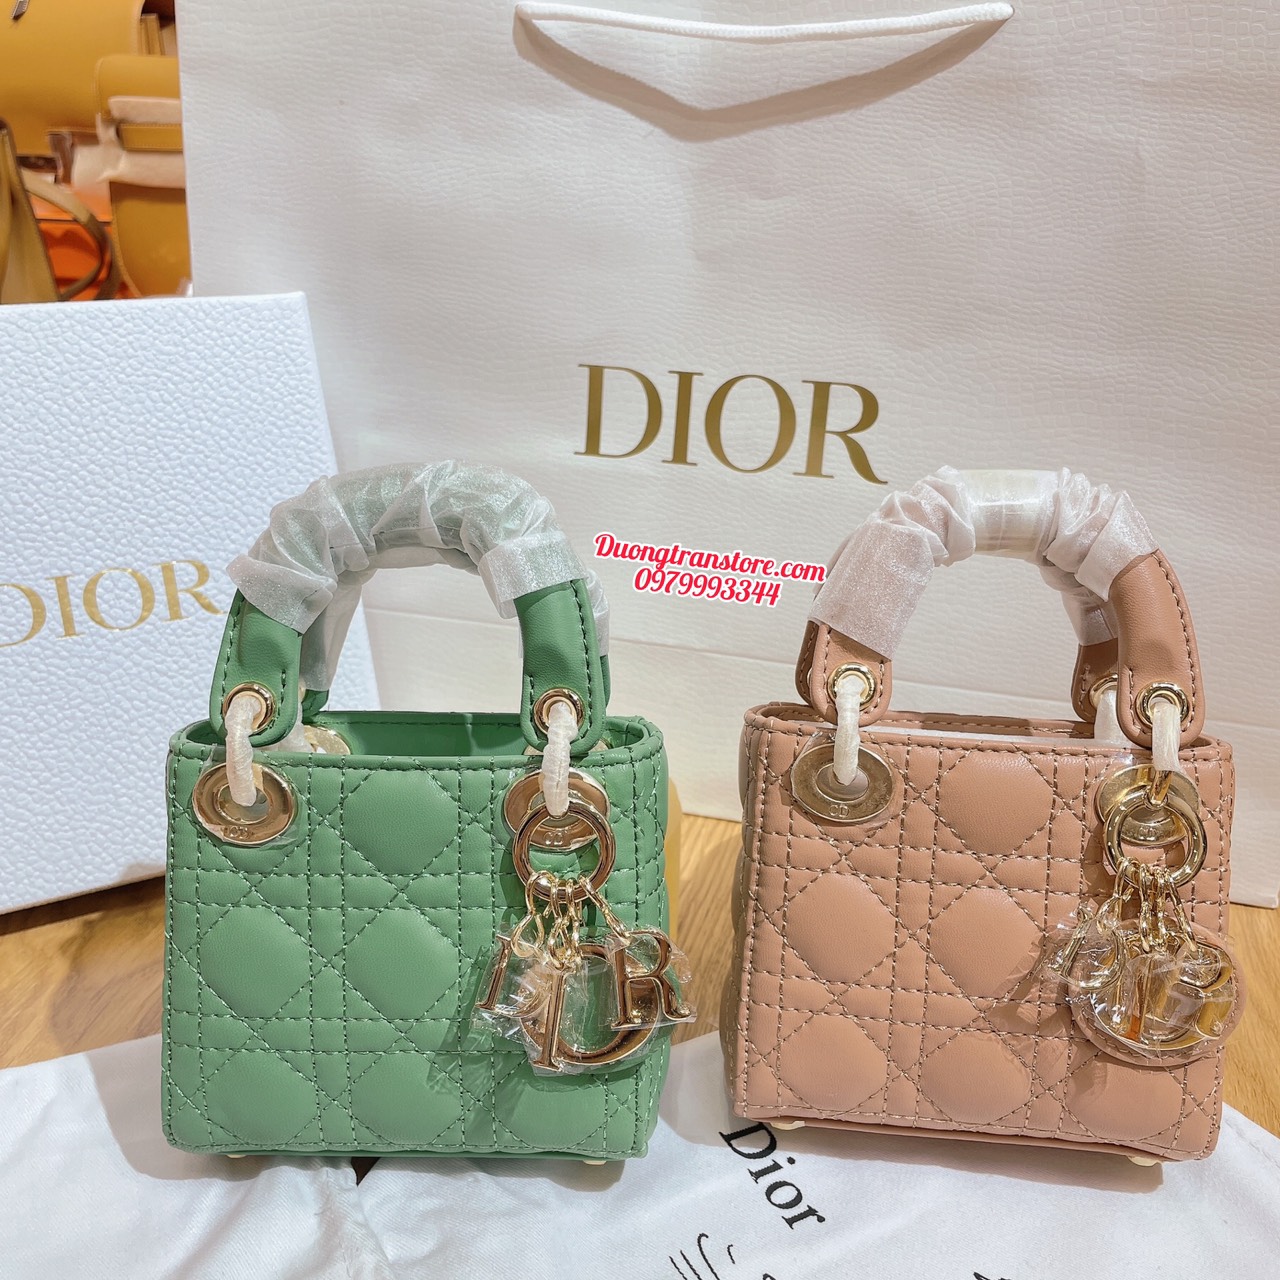 Lady Dior size chart  Dior Purse  Ideas of Dior Purse dior purse  diorpurse  Lady Dior size chart  Lady dior Dior purses Lady dior bag